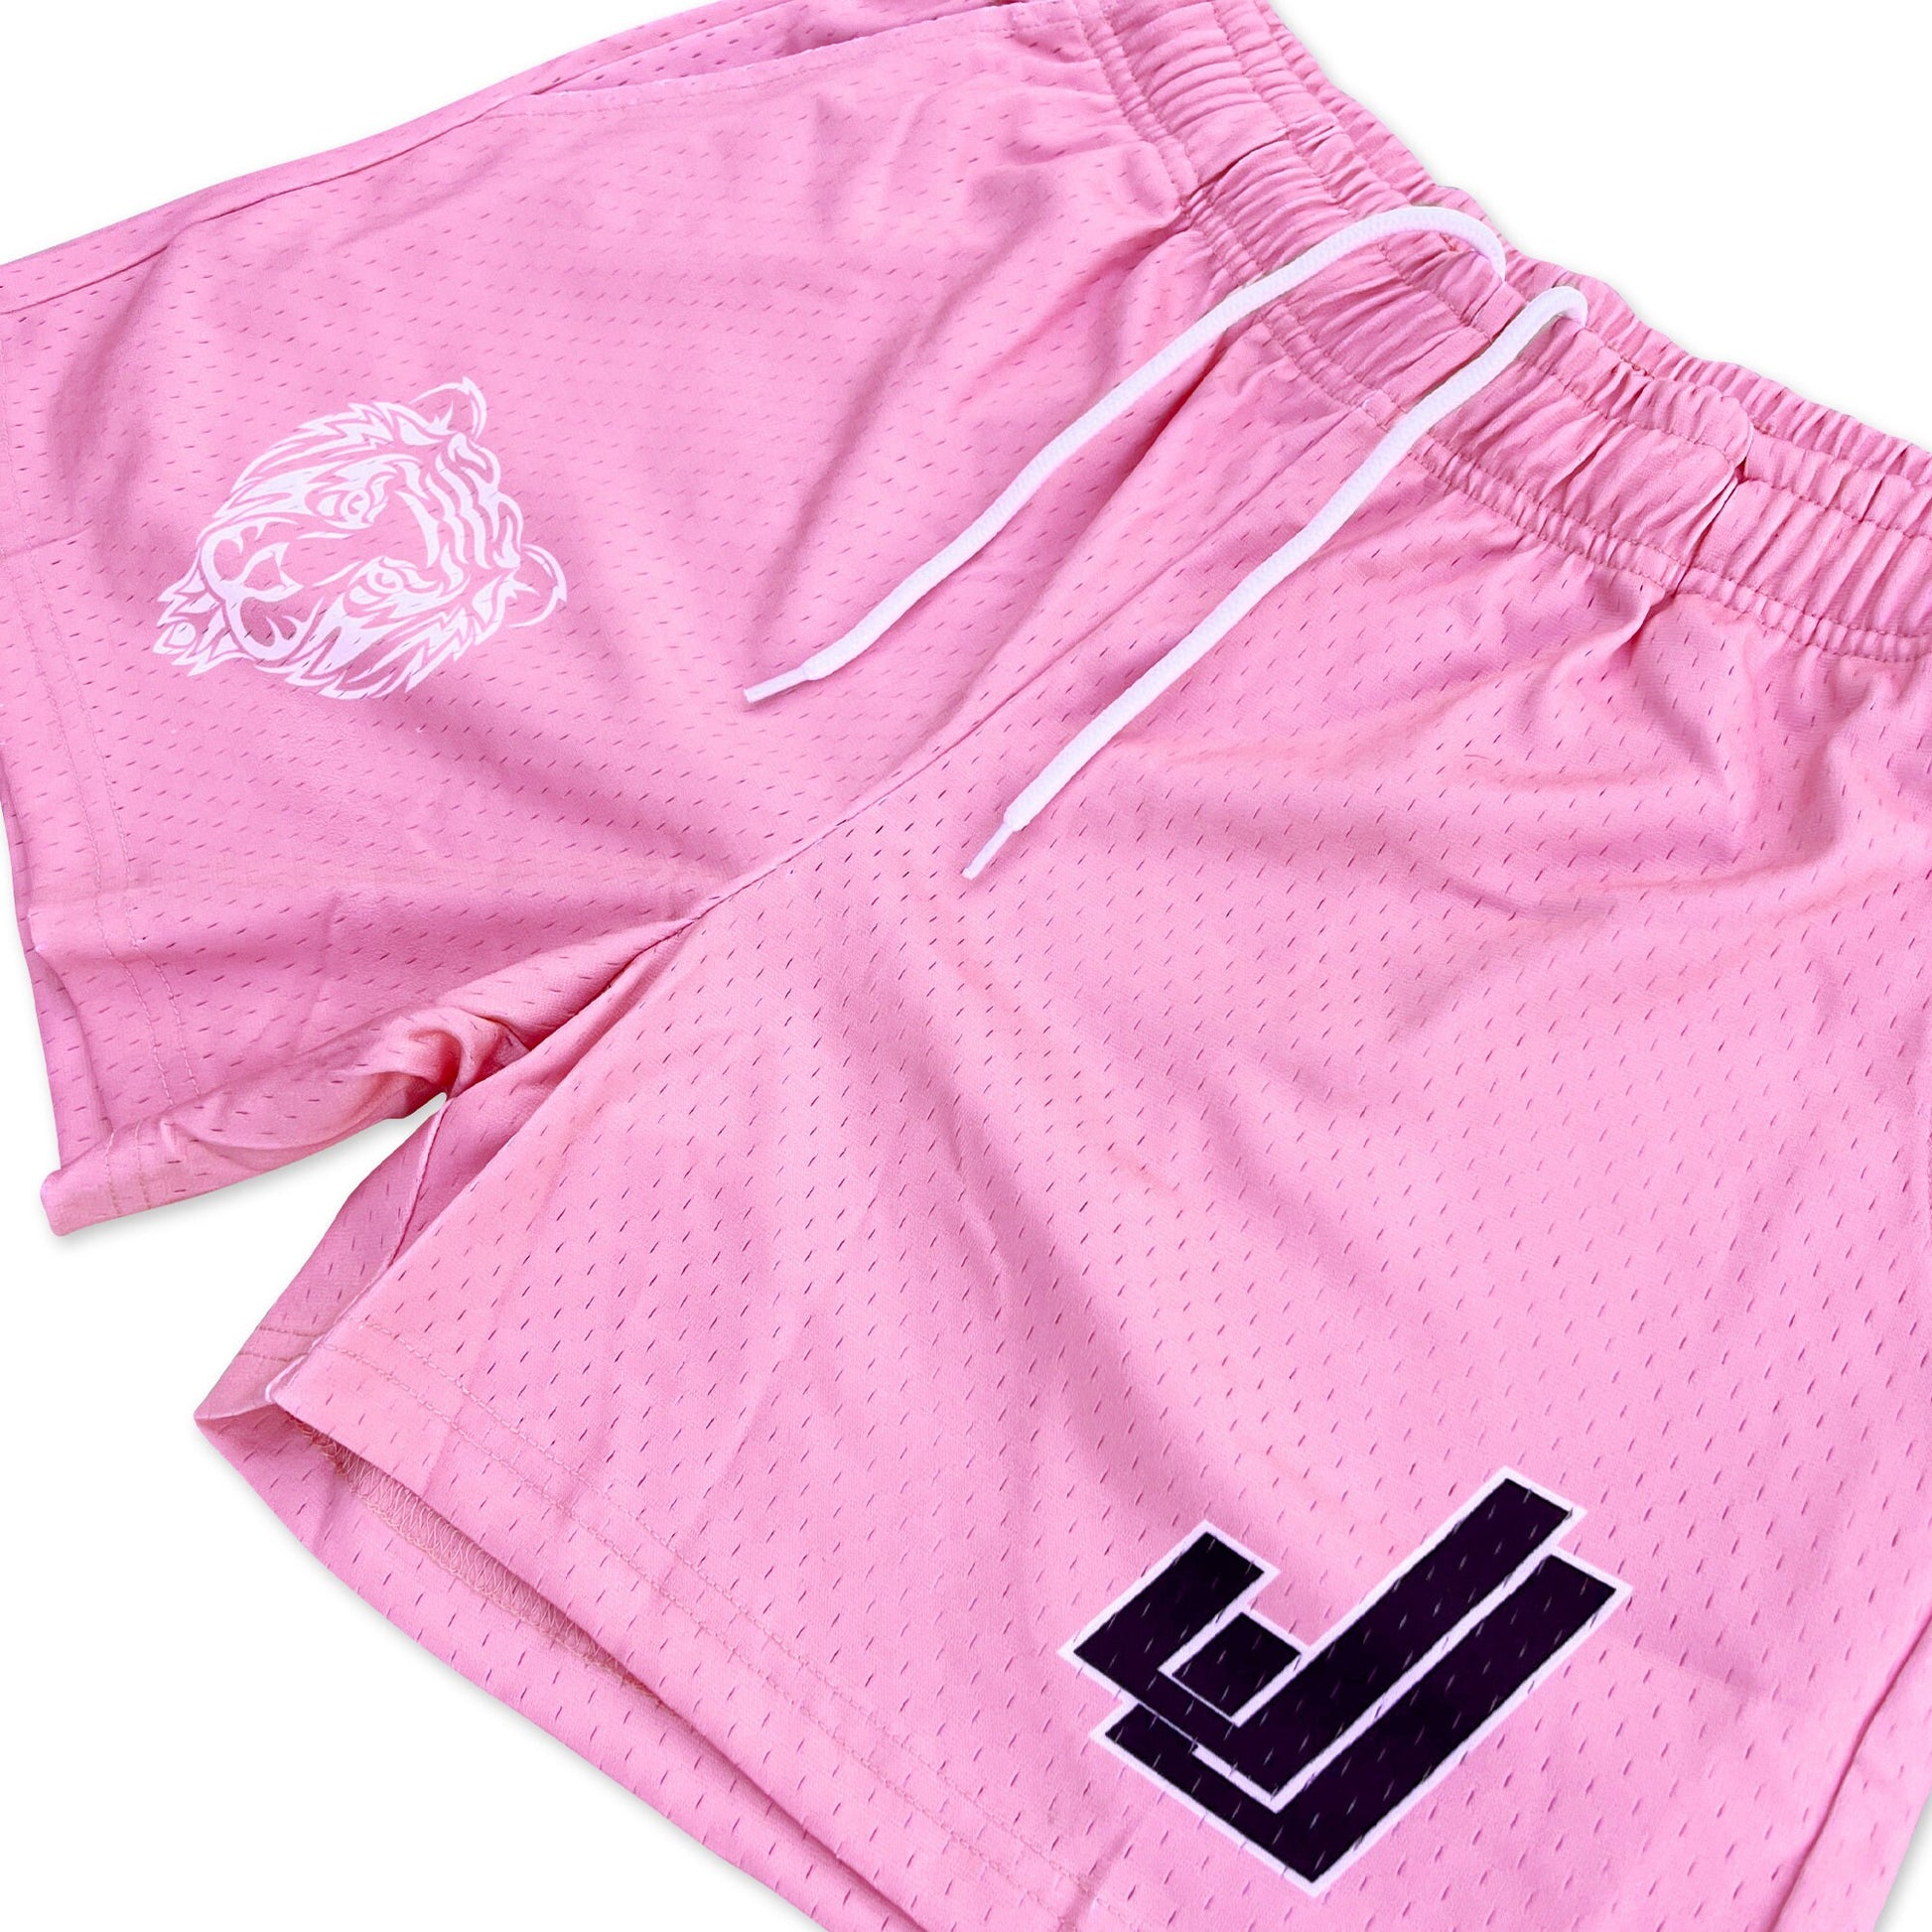 Pink - Premium Mesh JJ Shorts - 5 Inch Inseam - Vintage Gym Basketball Fit  (Preorder)